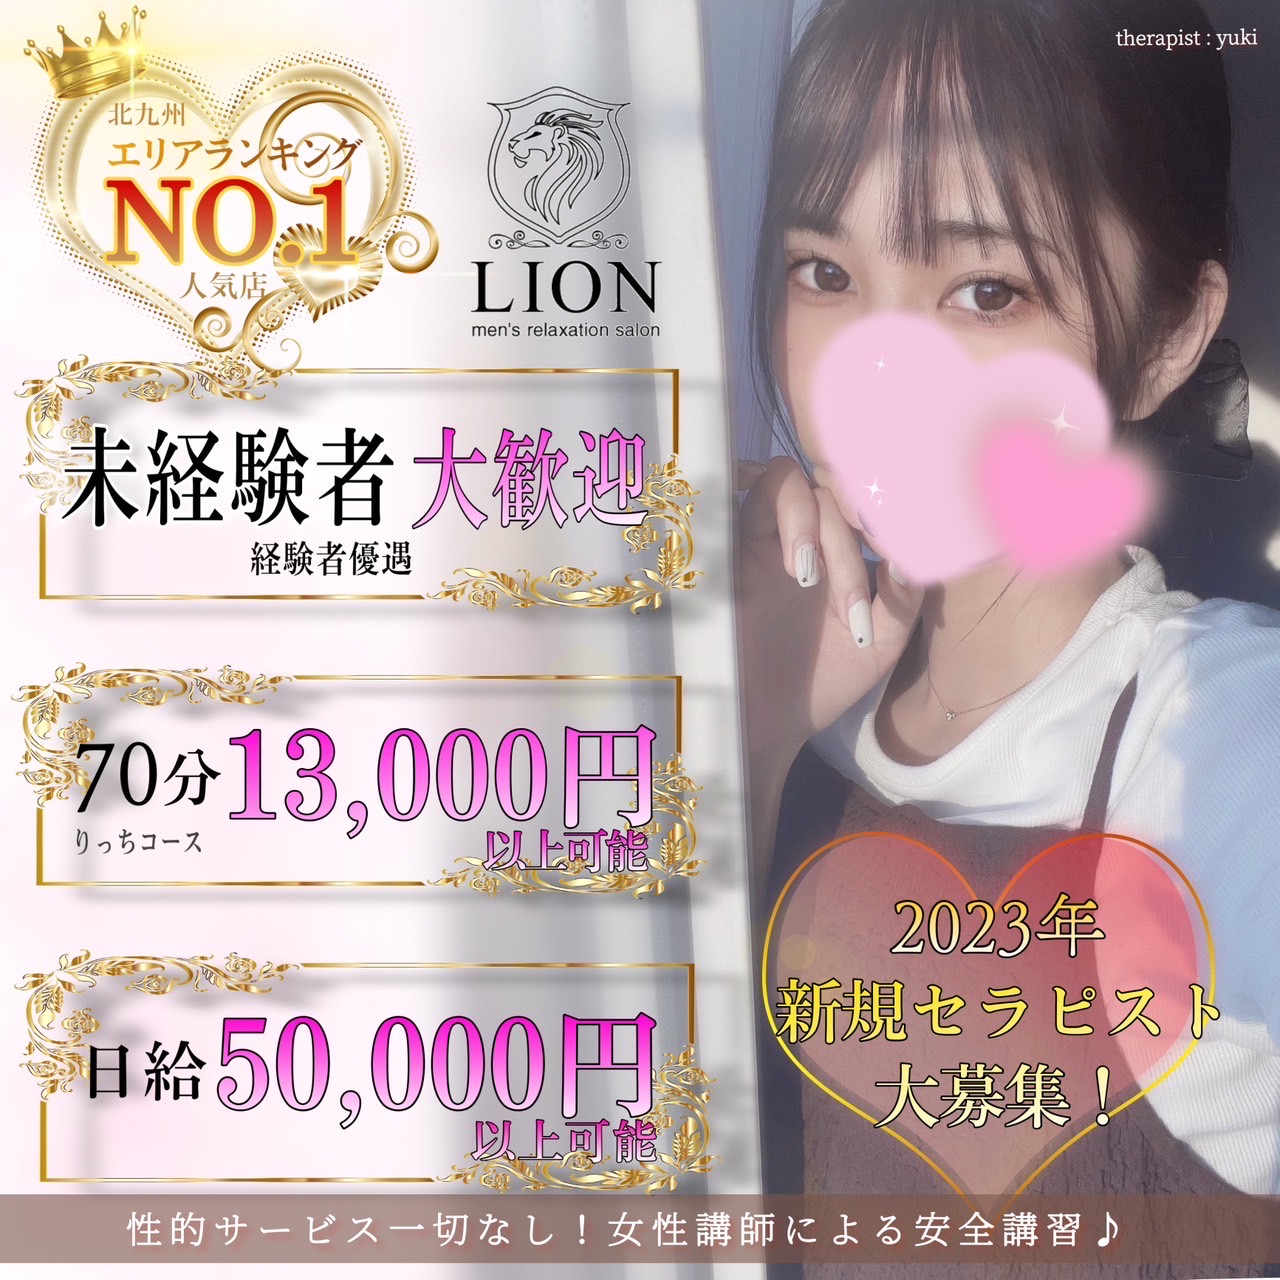 Lion-リオン-のルーム画像2